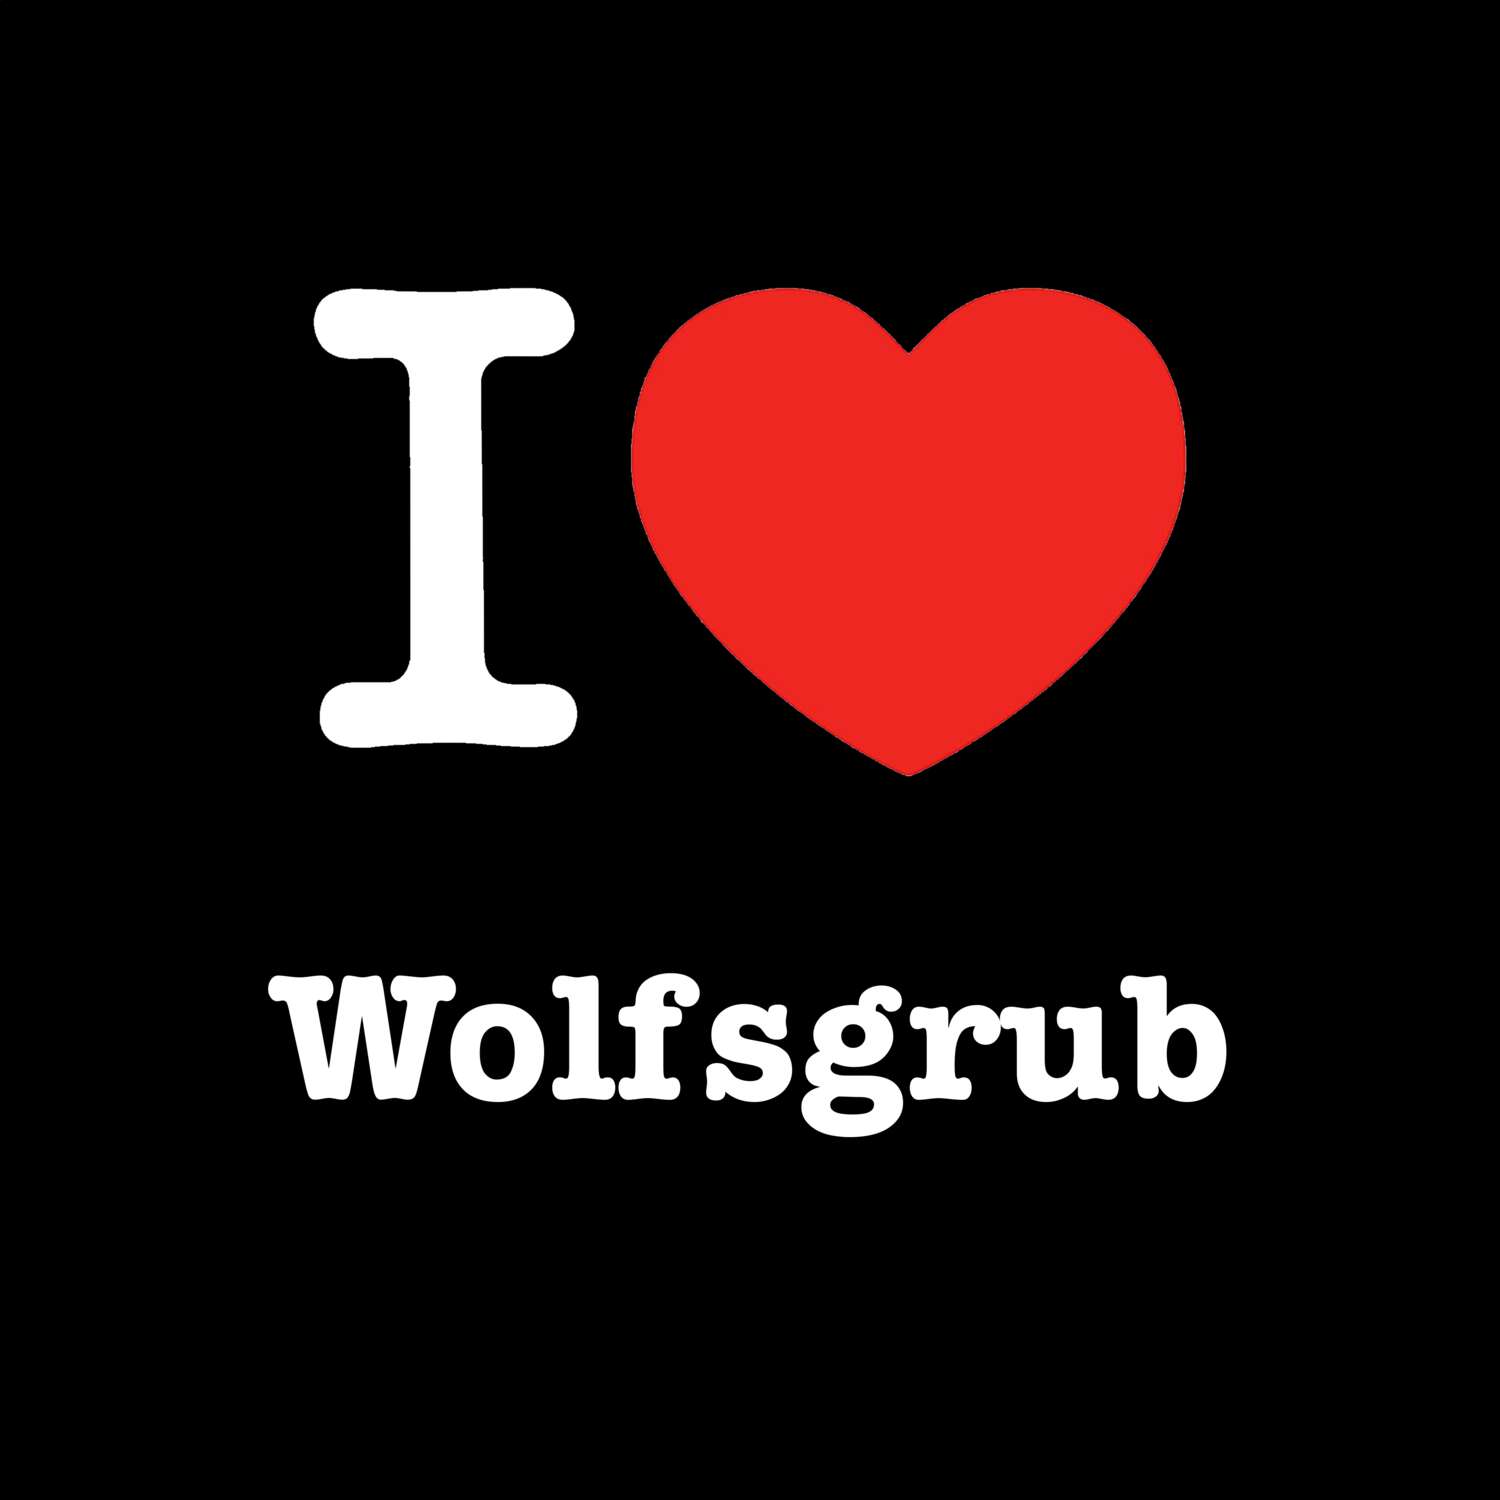 Wolfsgrub T-Shirt »I love«